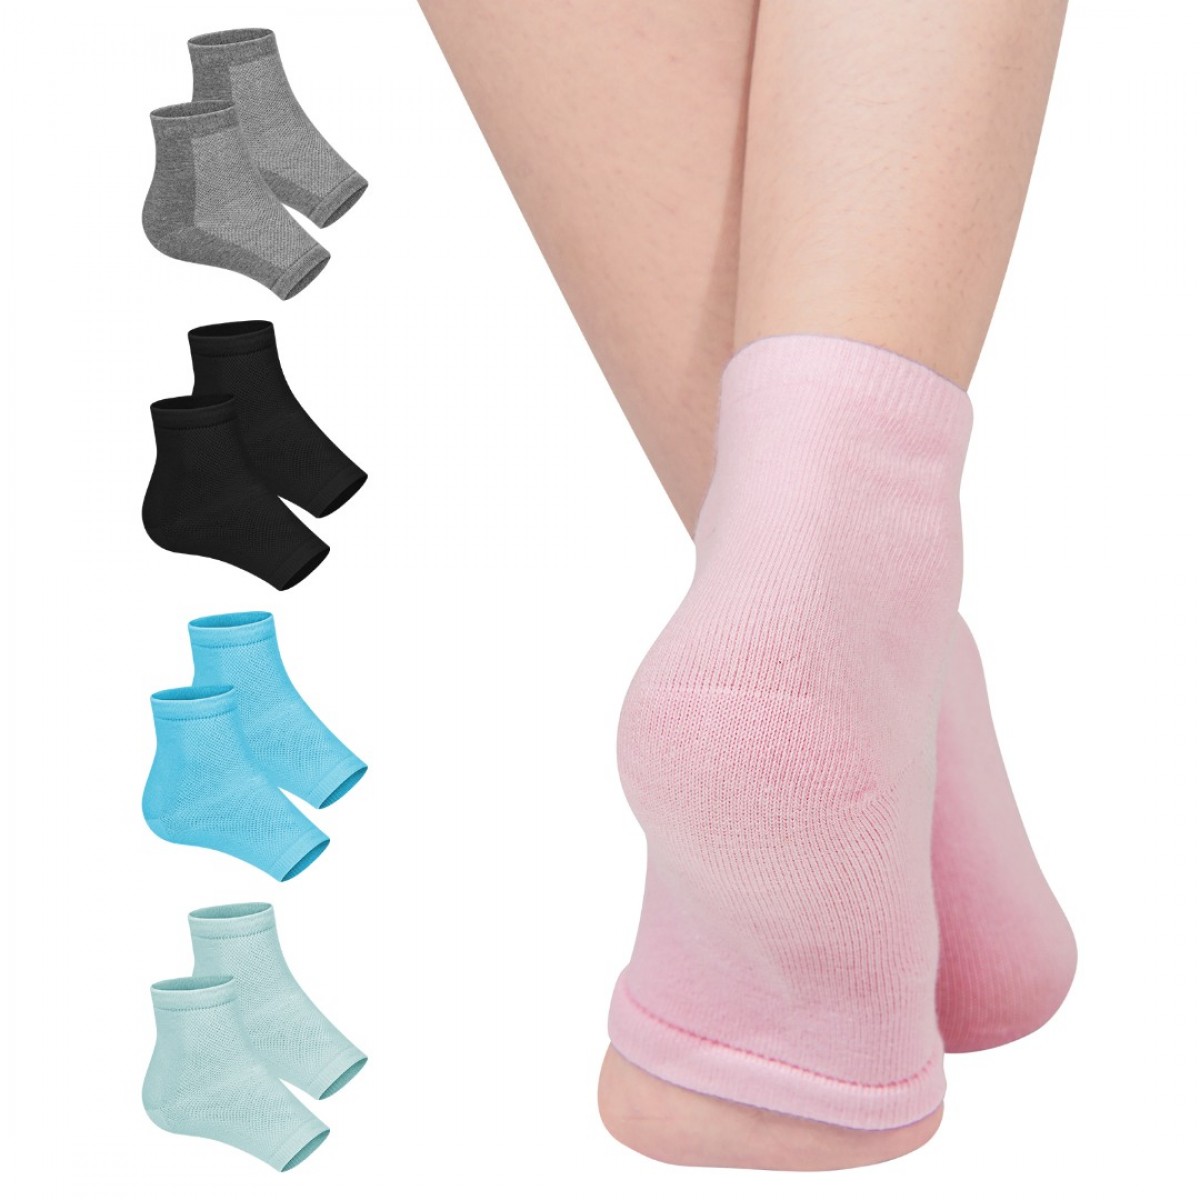 Cracked Heel Treatment Repair Socks - Ohtomber 5 Pairs Heel Softener Socks for Dry Cracked Feet Heel